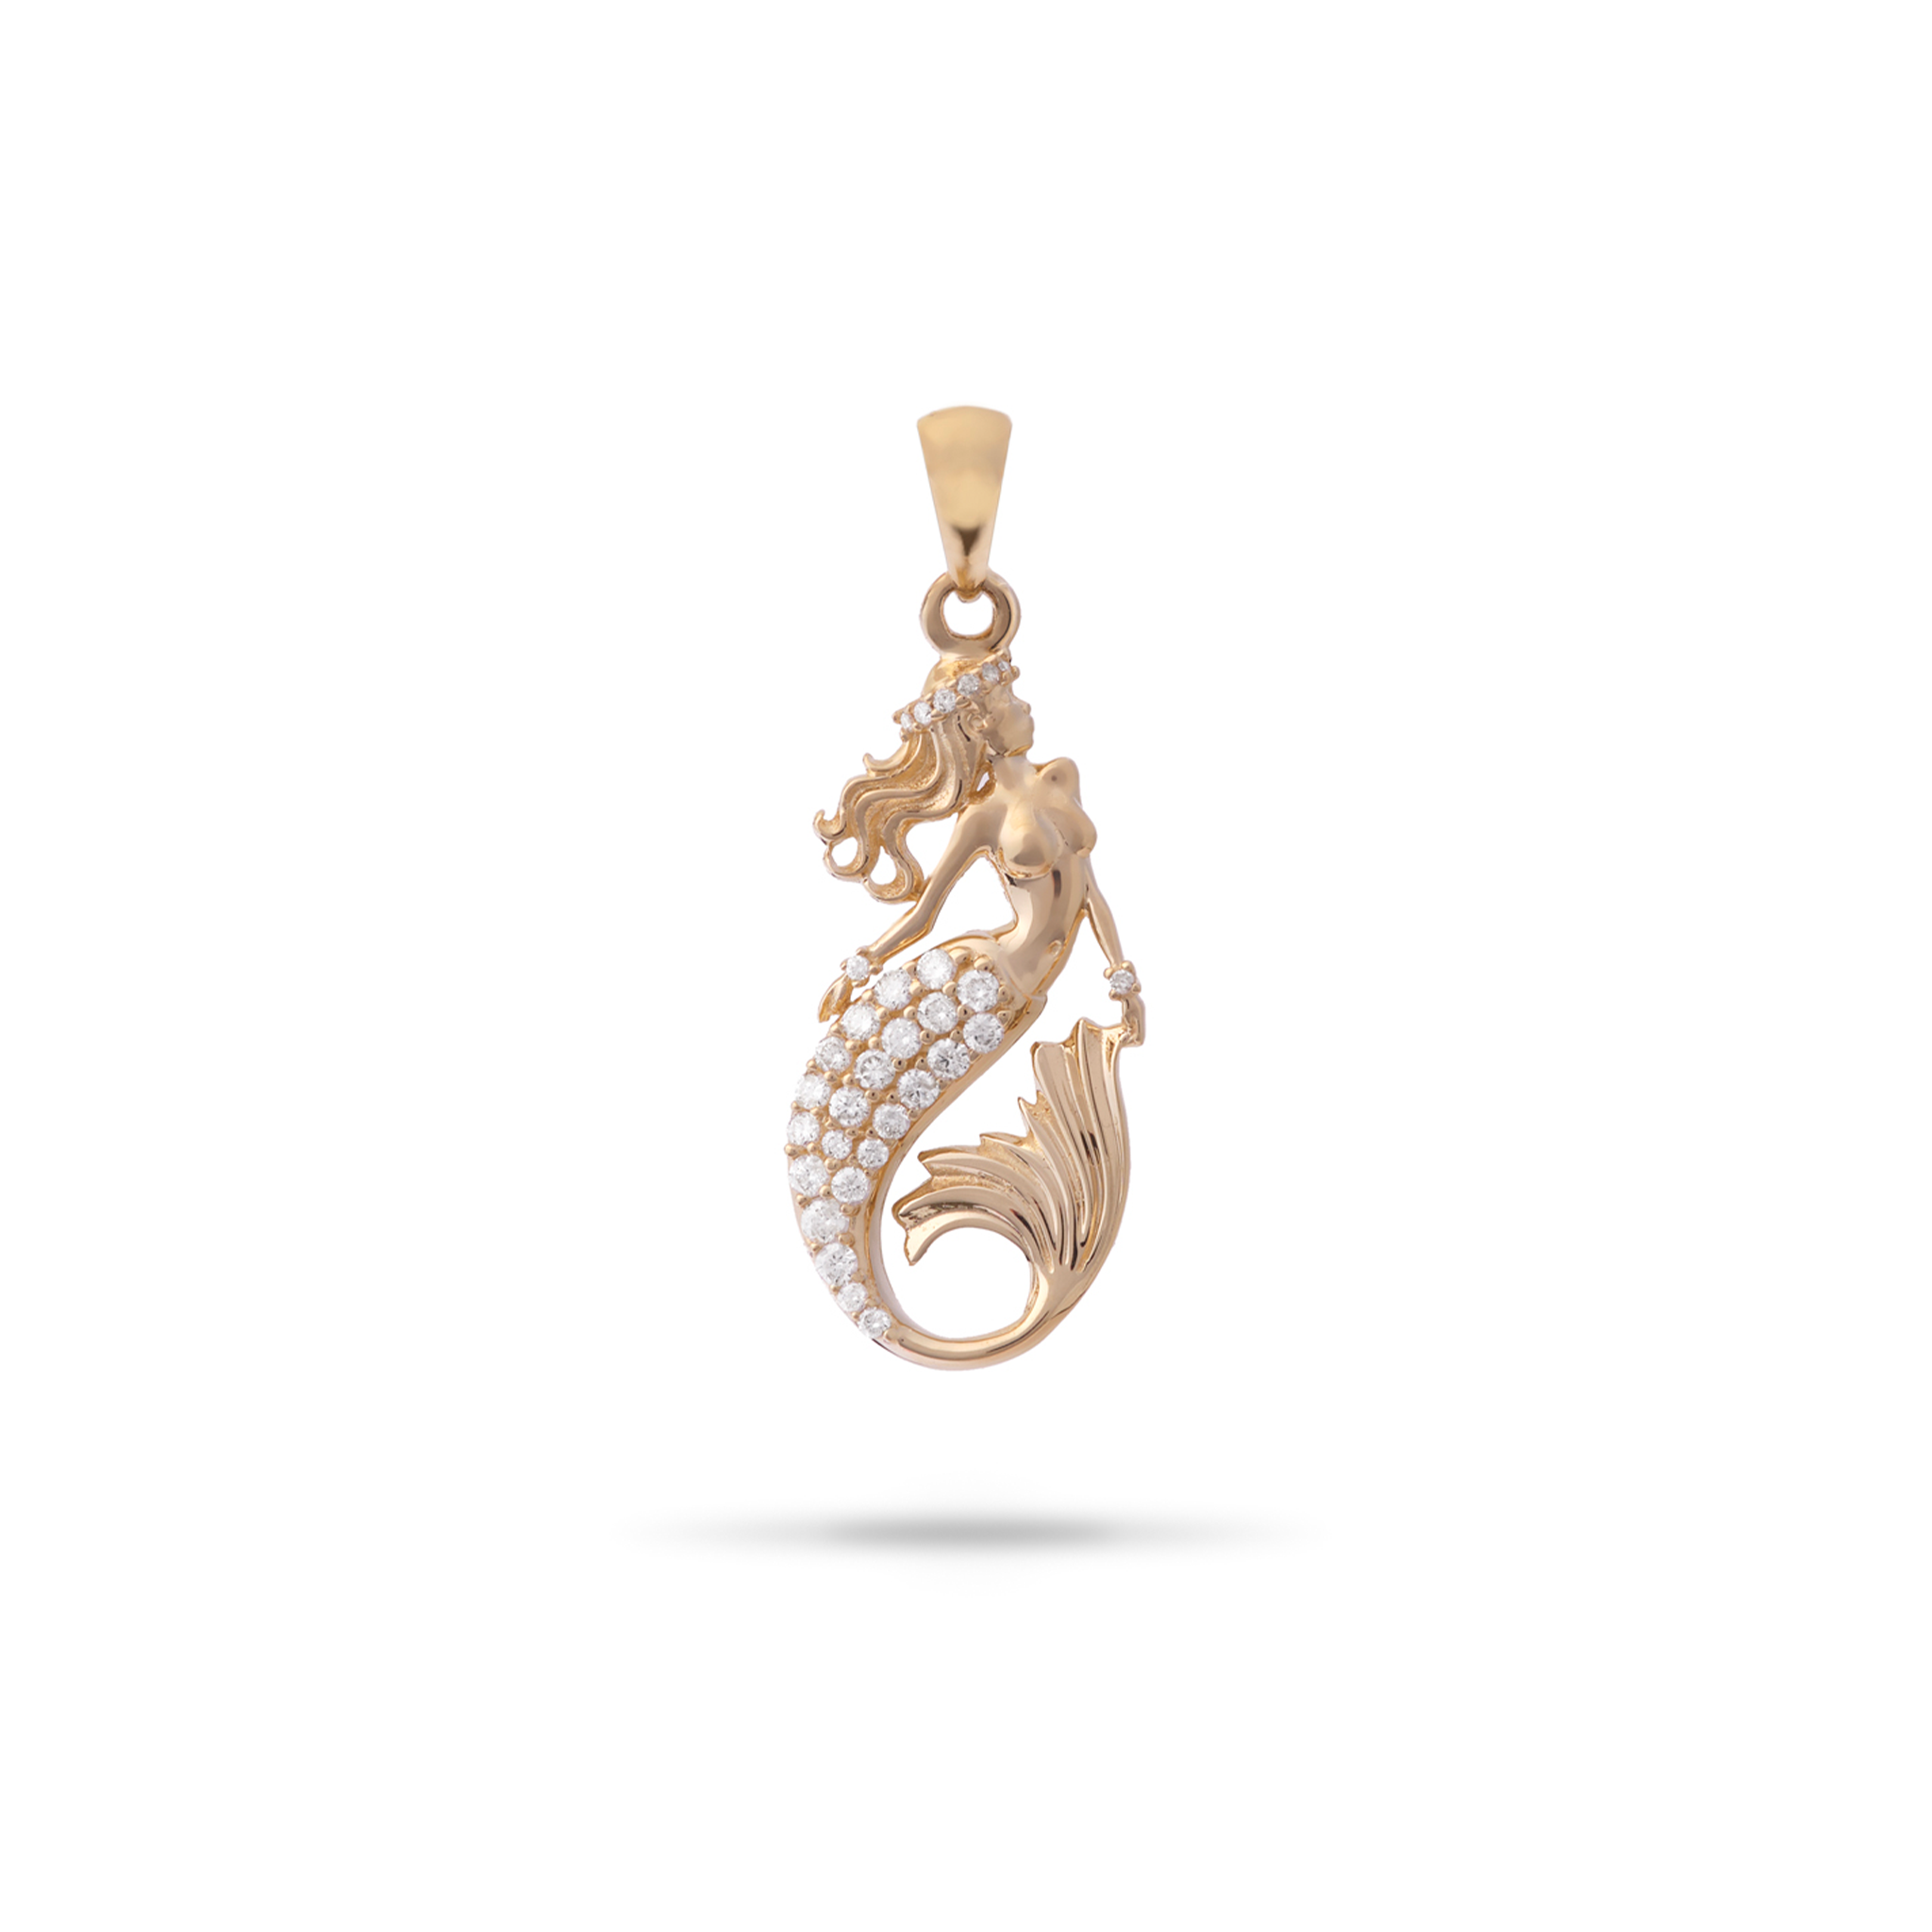 Sealife Mermaid Pendant in Gold with Diamonds - 24mm